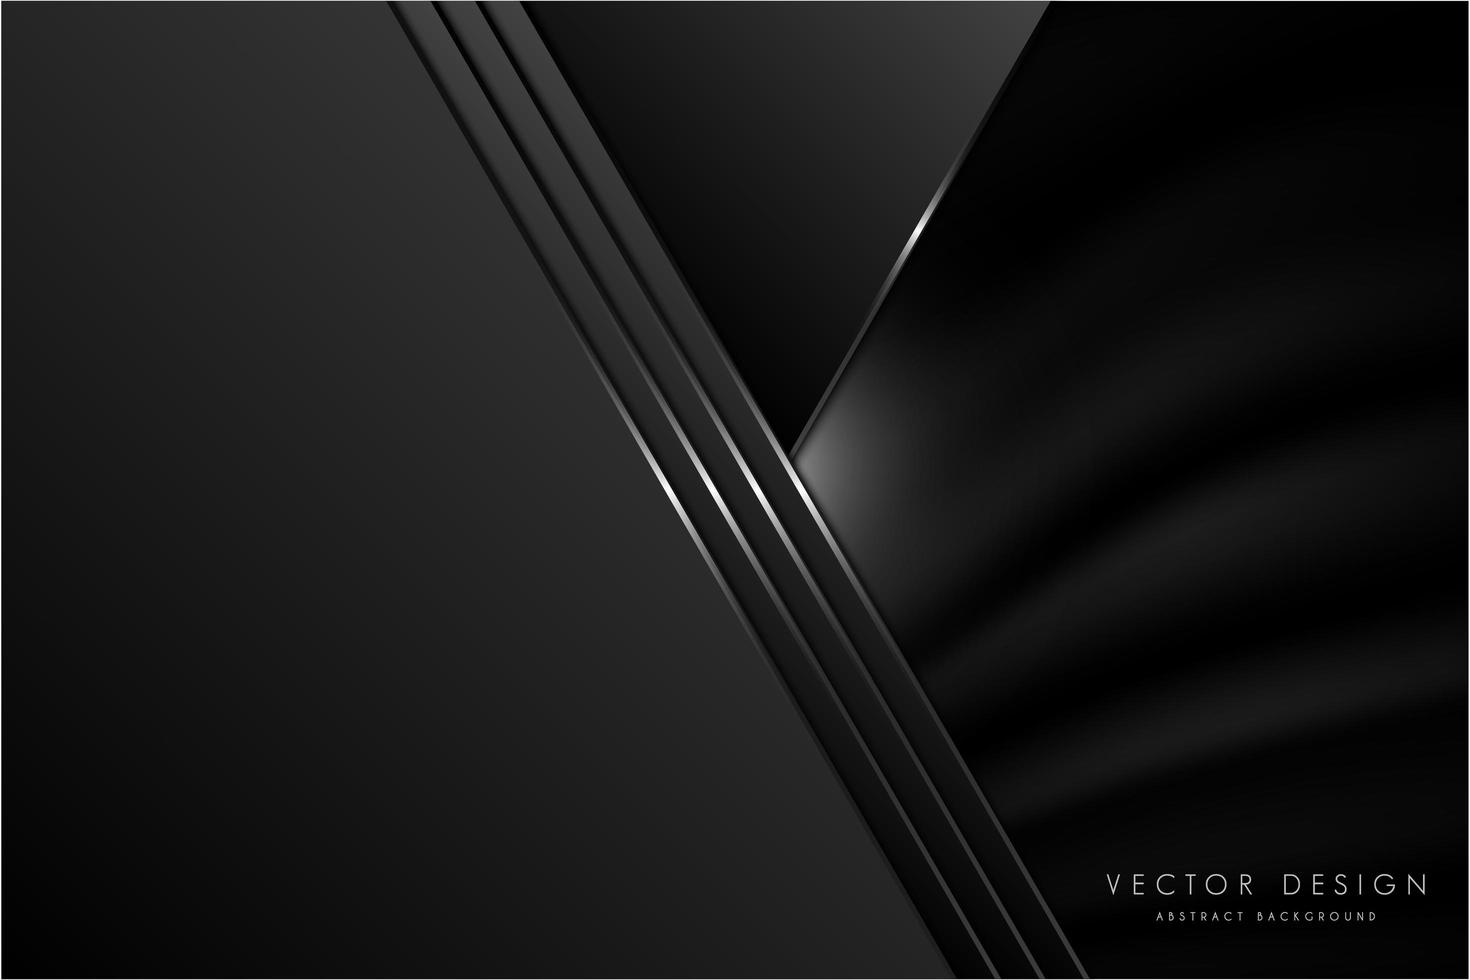 Ministro Converger compañerismo elegante fondo negro metalizado 1631006 Vector en Vecteezy